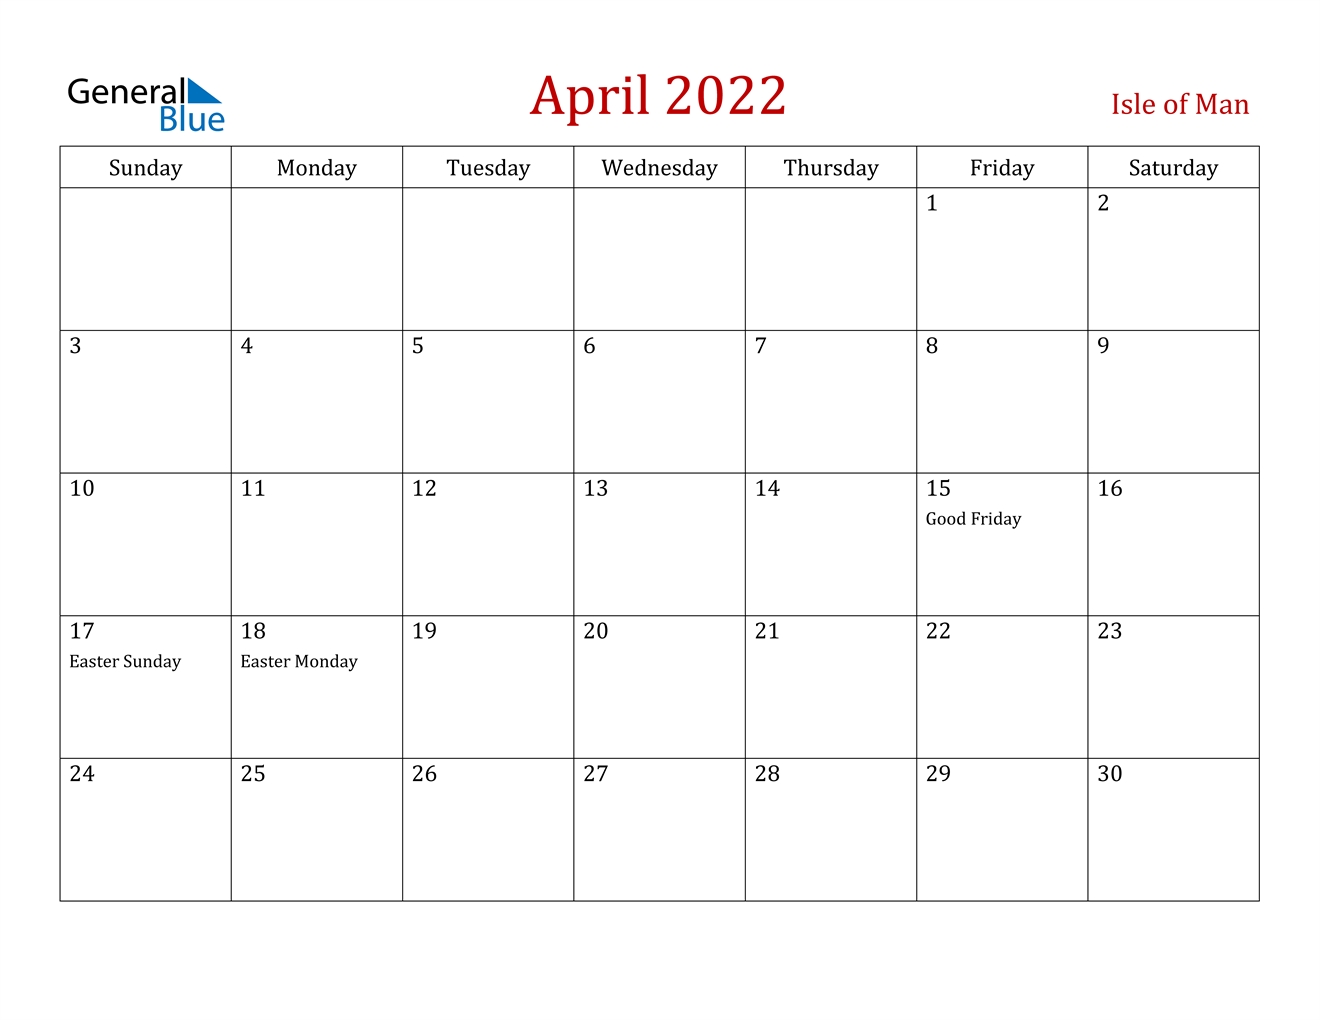 April 2022 Calendar - Isle Of Man